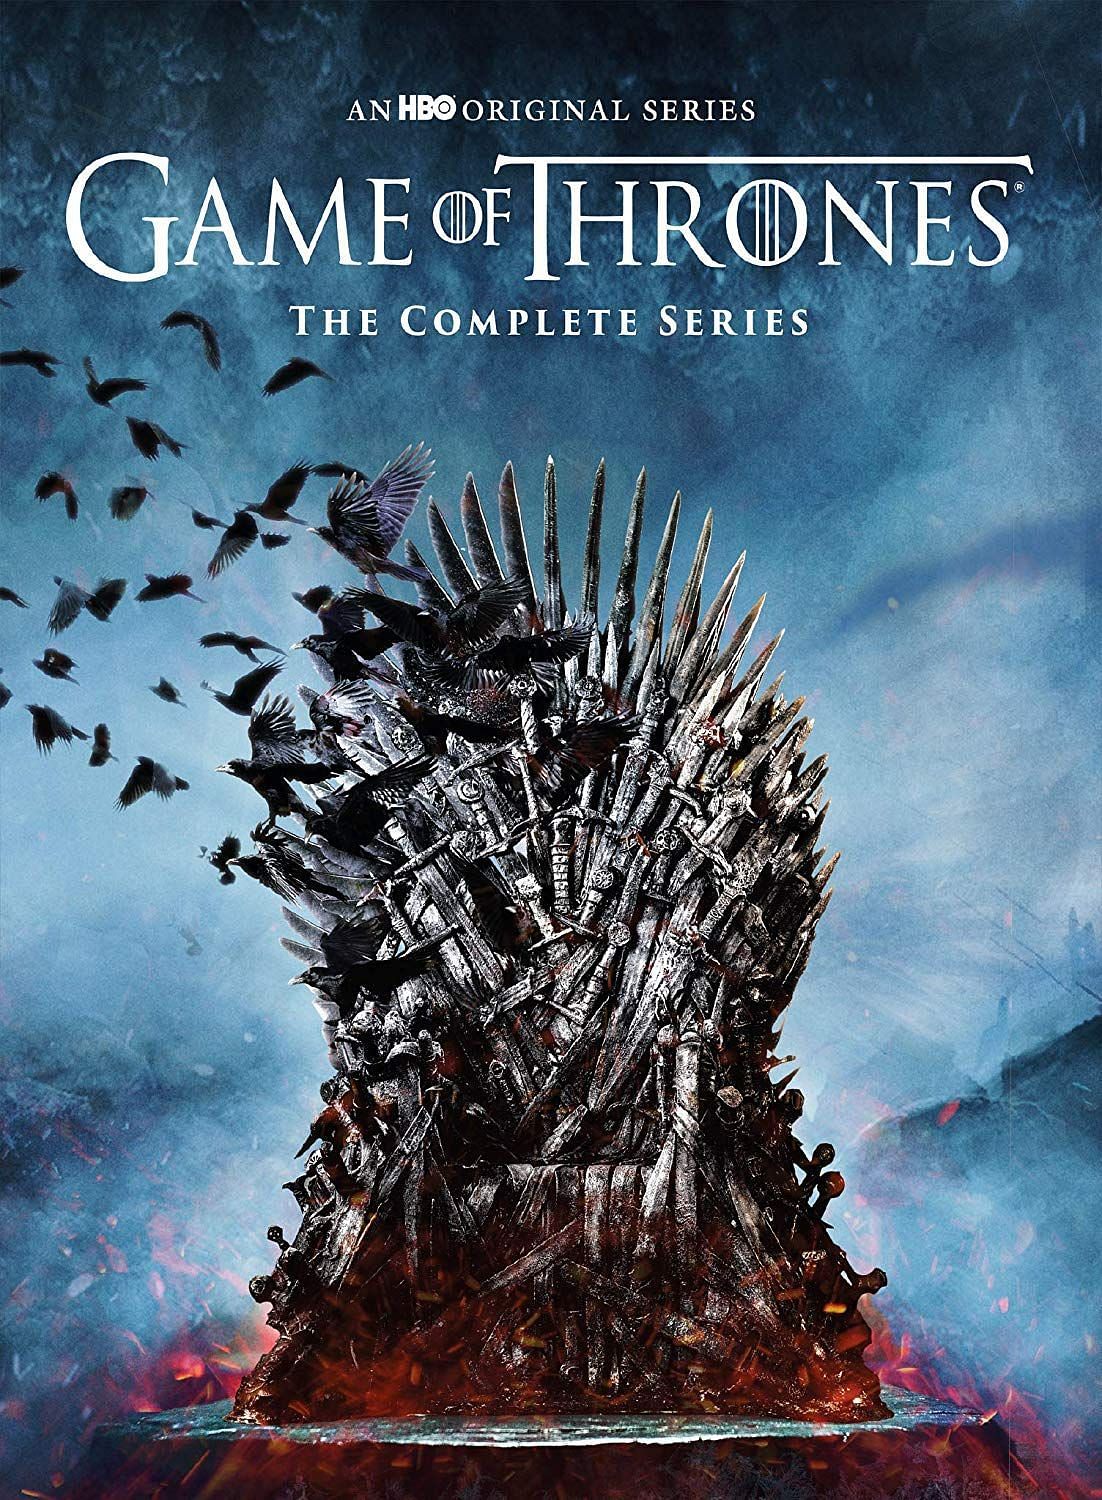 The Iron Throne (Image via IMDb)